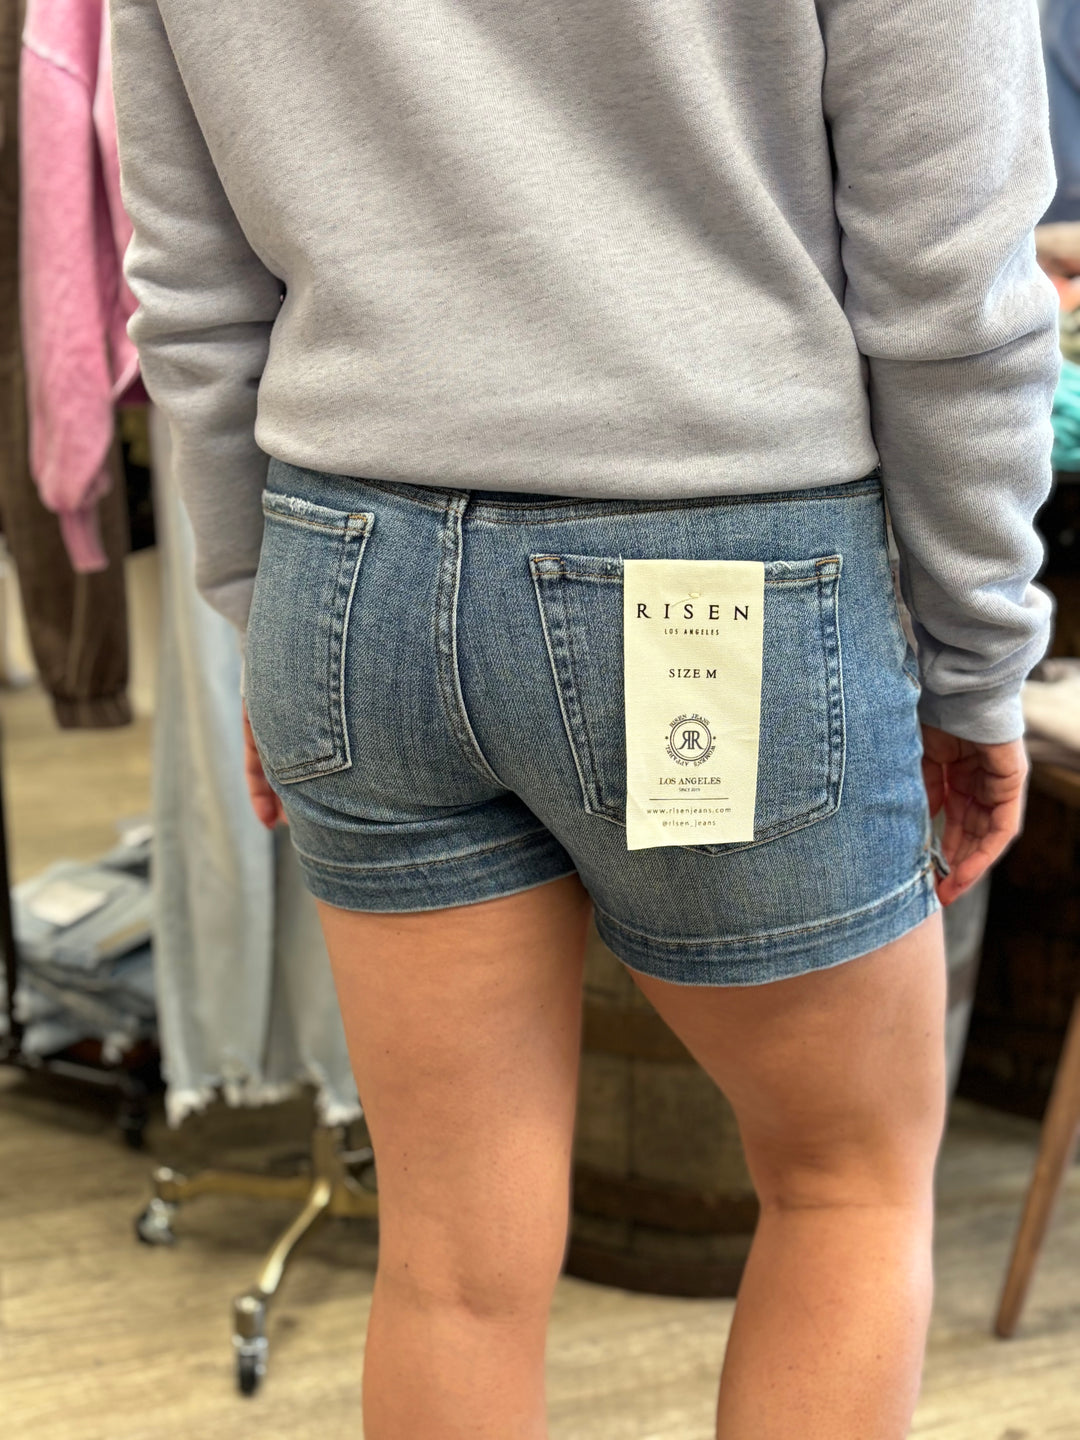 Risen High Rise Basic Shorts | Medium-Shorts-Risen-Evergreen Boutique, Women’s Fashion Boutique in Santa Claus, Indiana